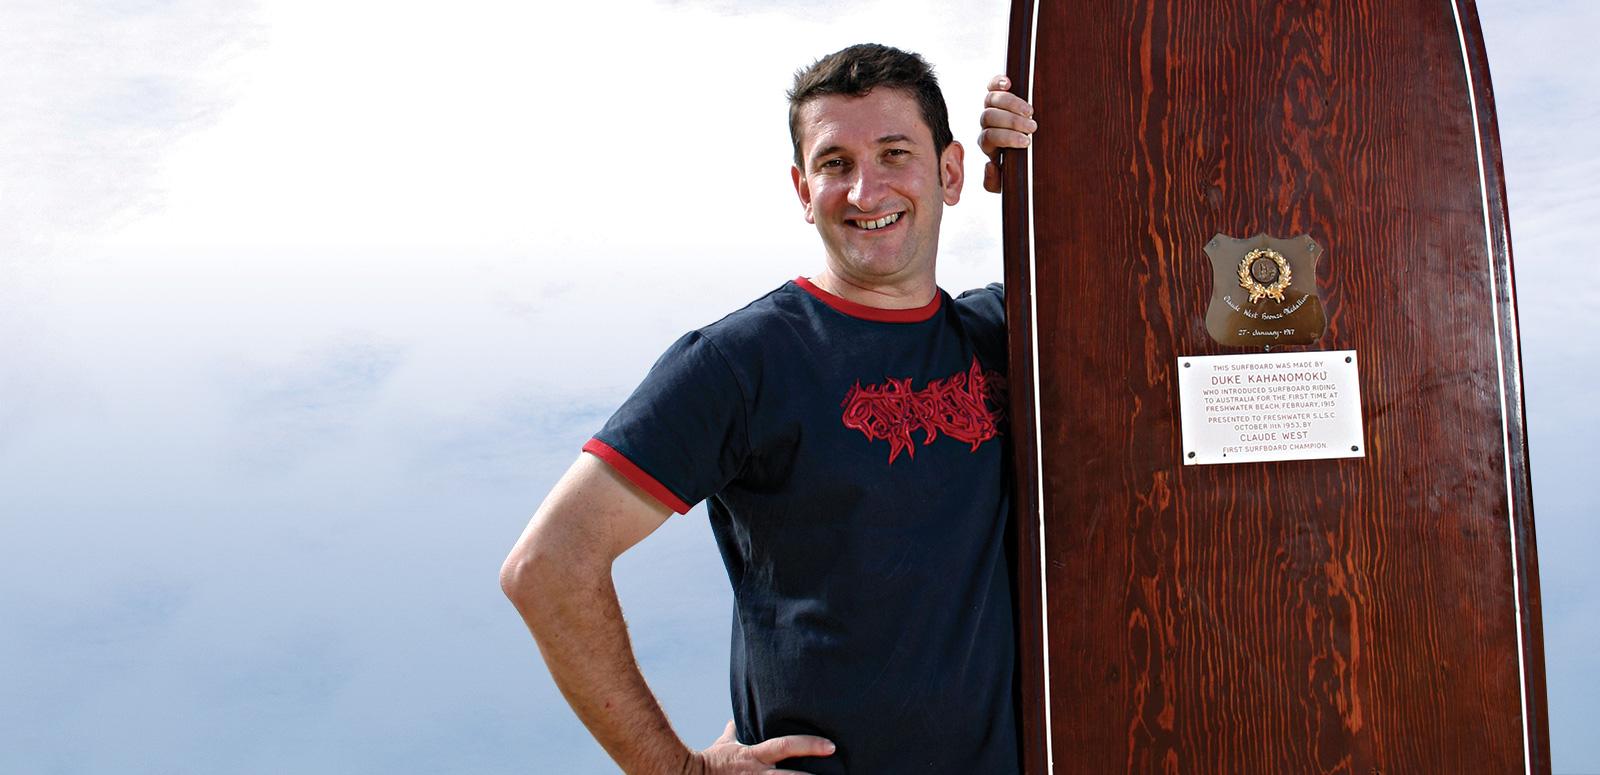 Warren Brown standing next to a large wooden surfboard